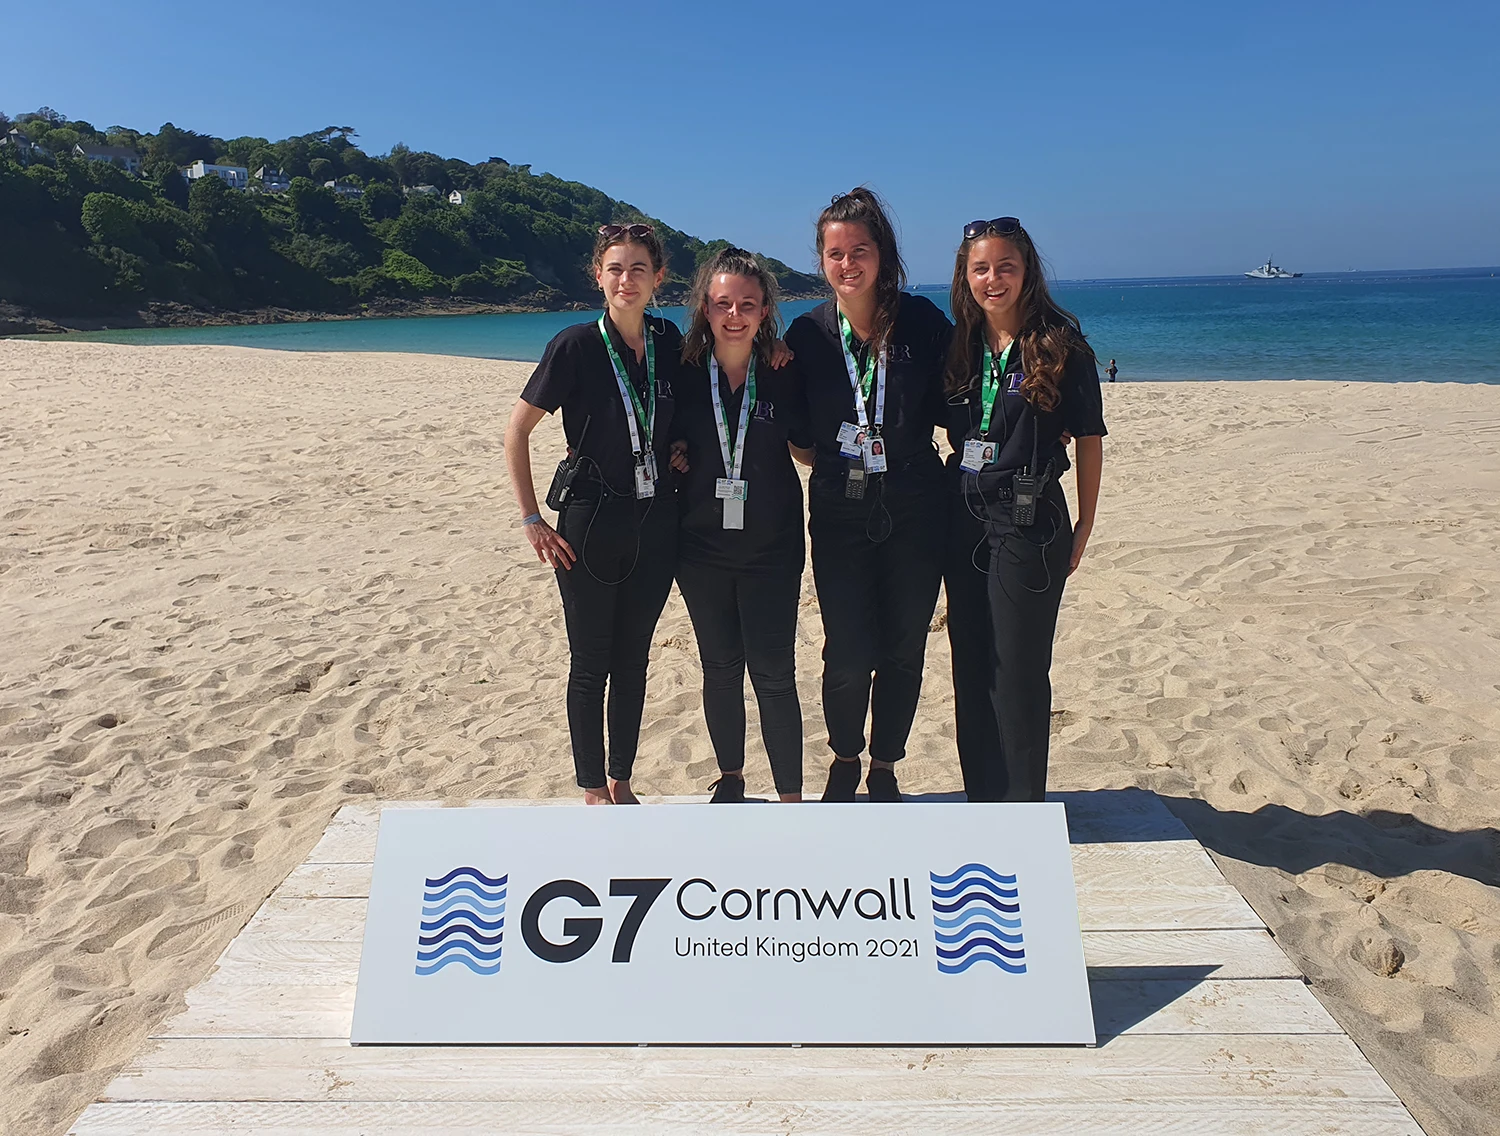 G7 Cornwall 2021